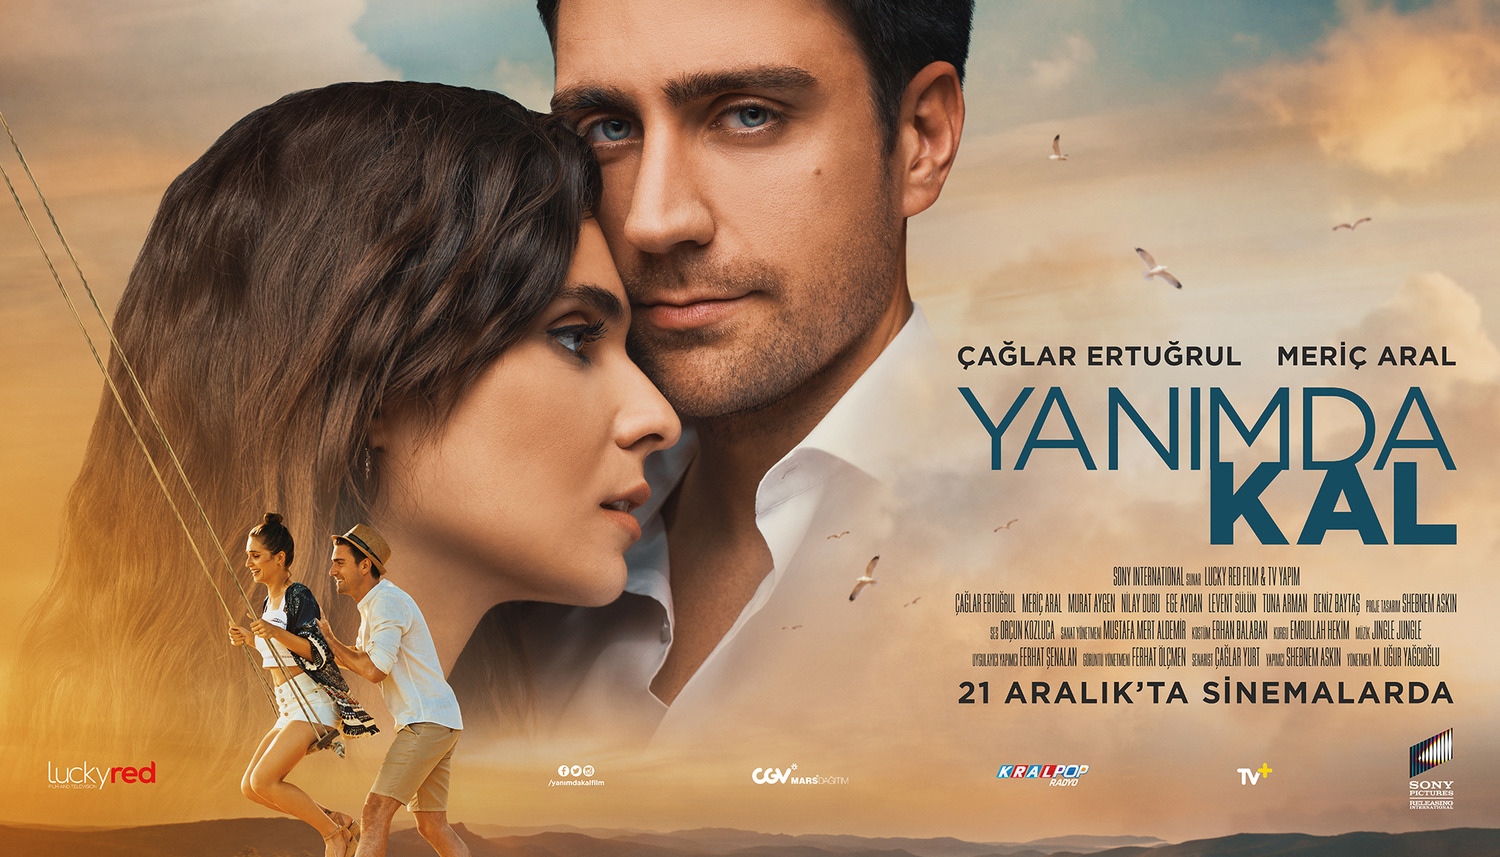 Extra Large Movie Poster Image for Yanimda Kal (#3 of 3)